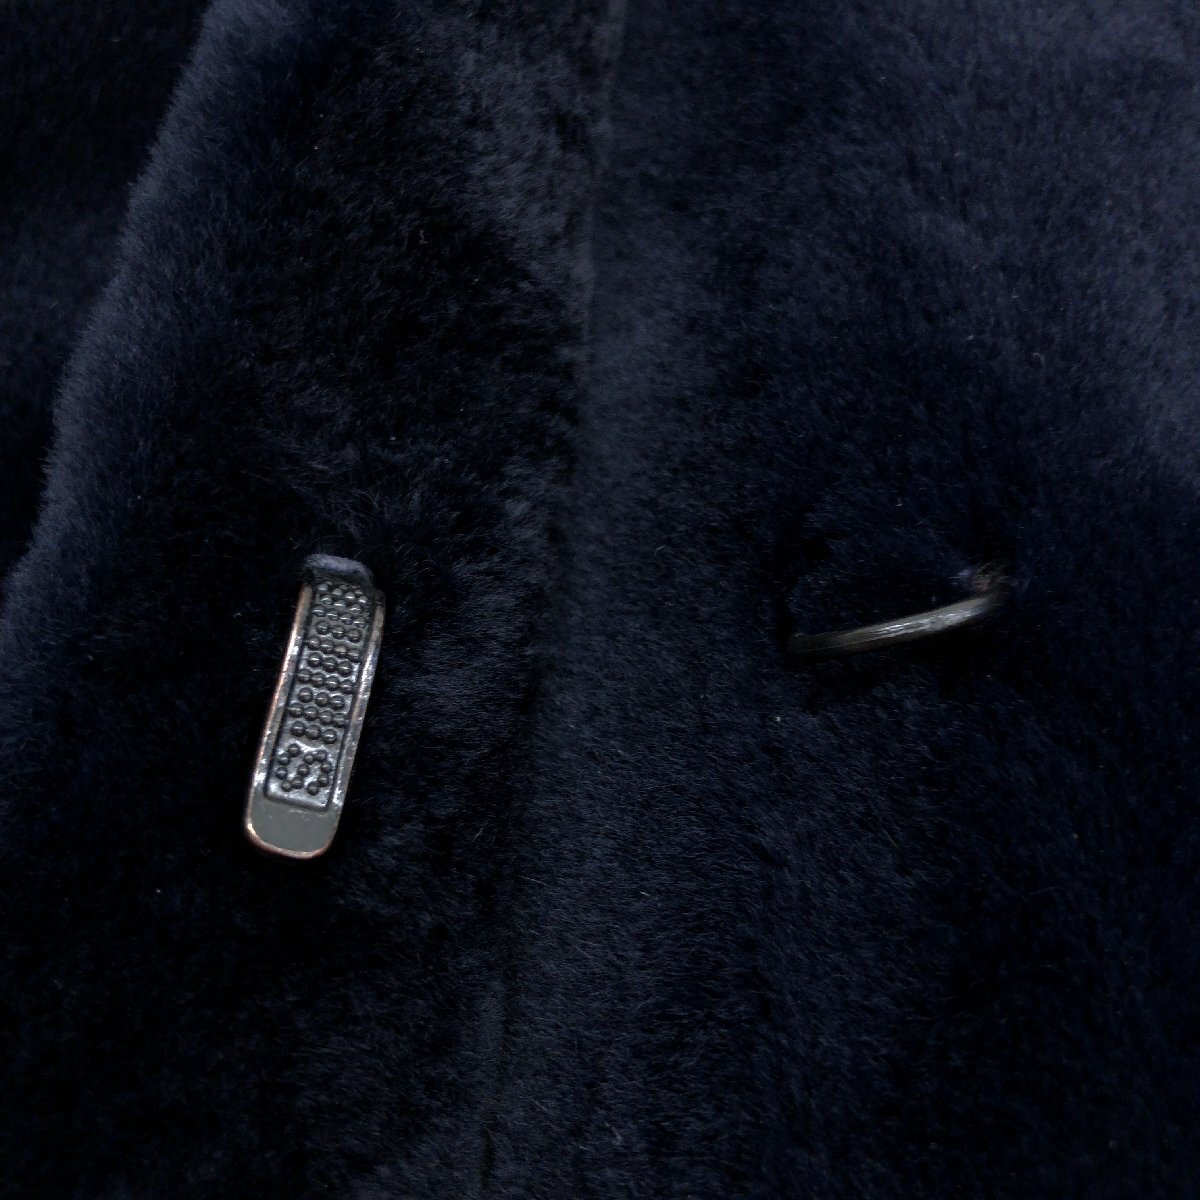 ★Mink Fur Coat 最高級毛皮 シェアードミンク セミロングコート F 濃紺 ネイビー ミンクファー リアルファー 毛皮 レディース 女性用 婦人_画像5